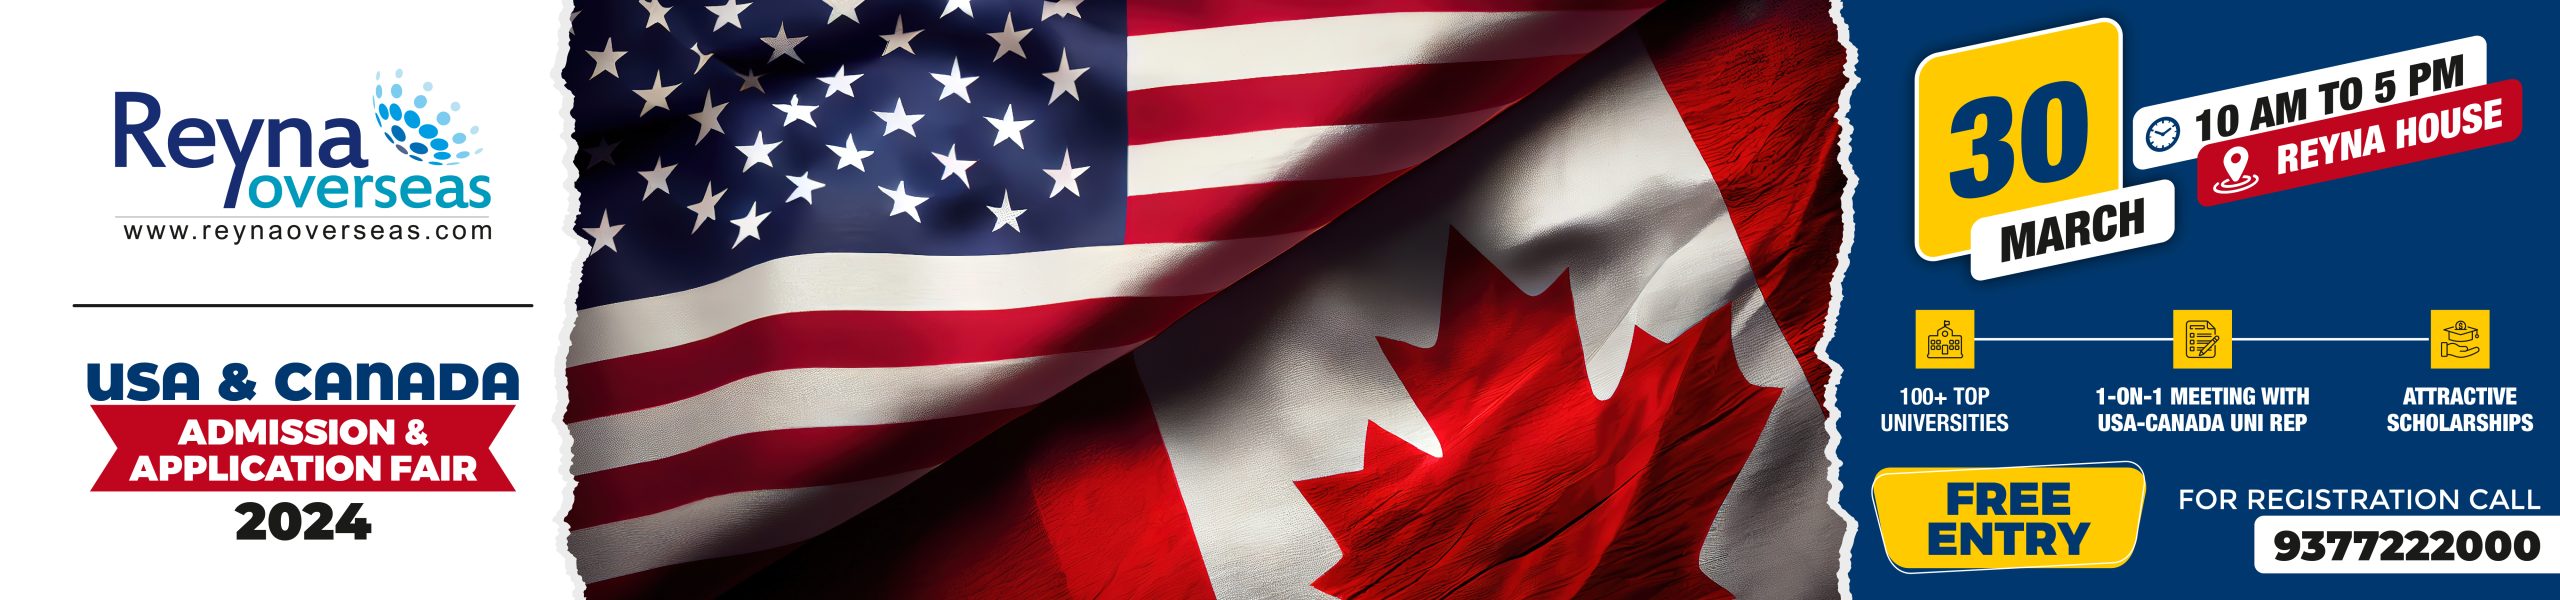 USA & Canada Admission Fair March 2024